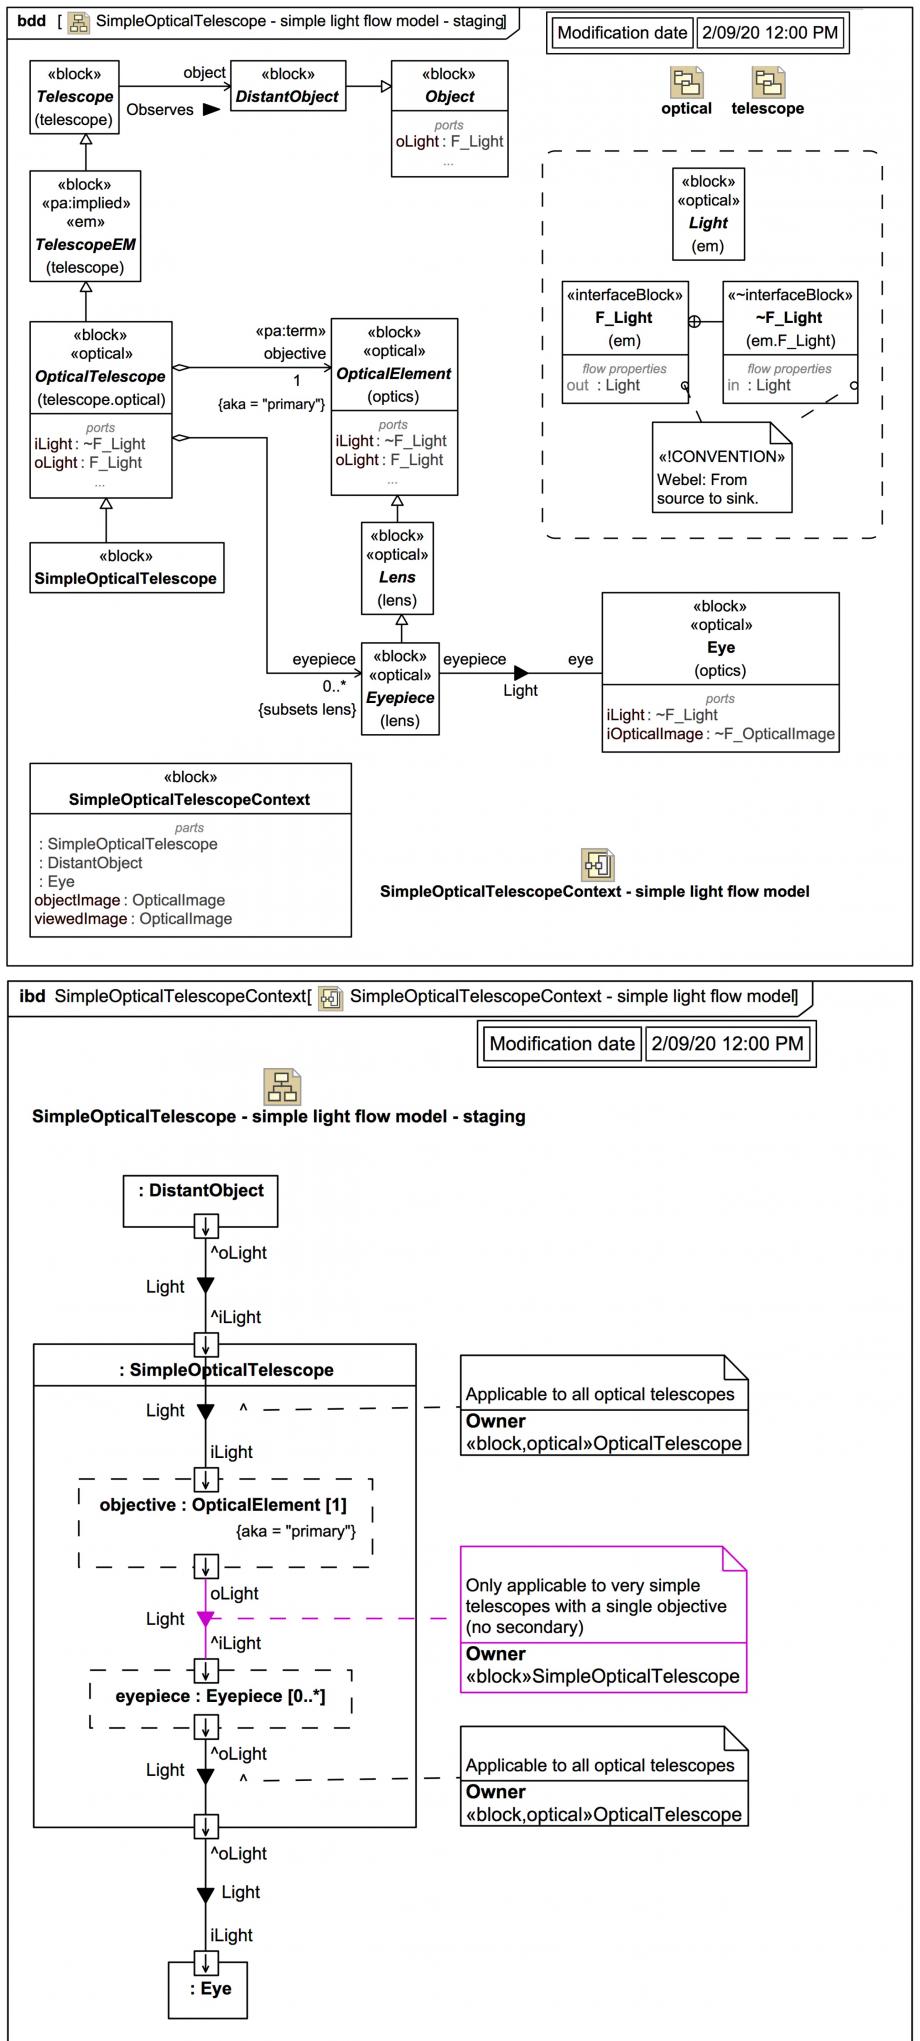 SimpleOpticalTelescope light flow model: staging BDD and context IBD